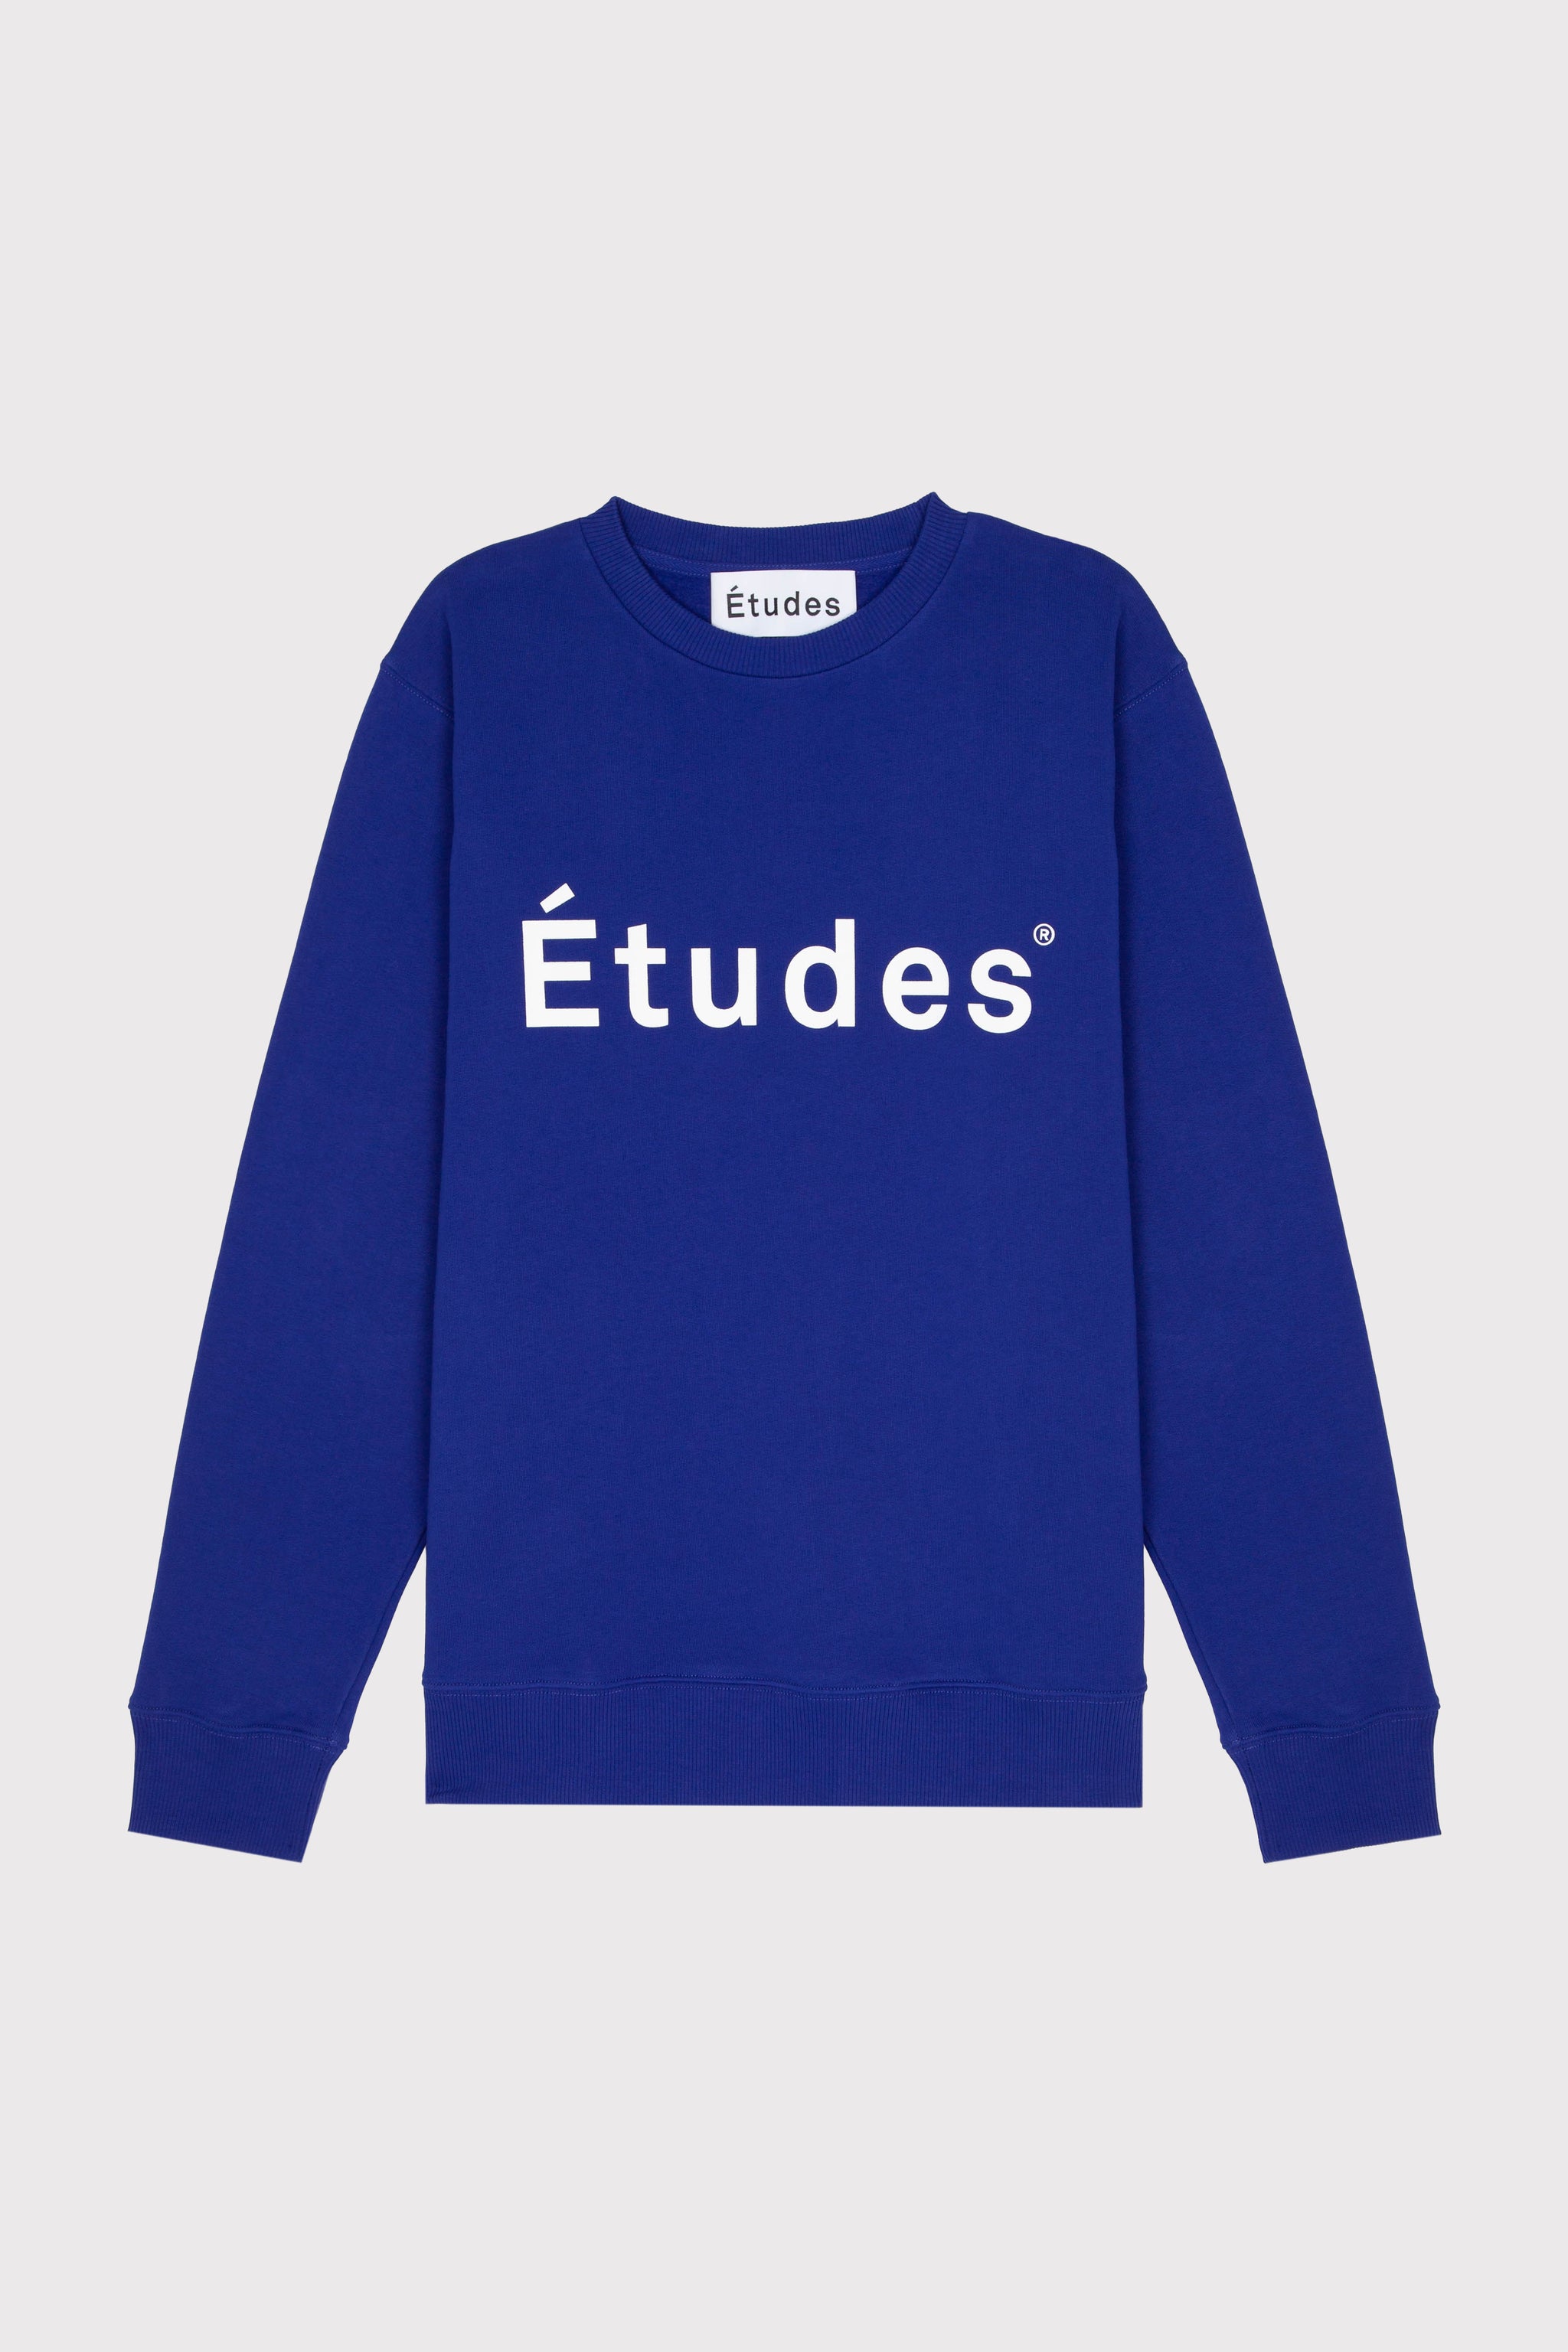 Études STORY ETUDES BLUE Sweatshirt 2